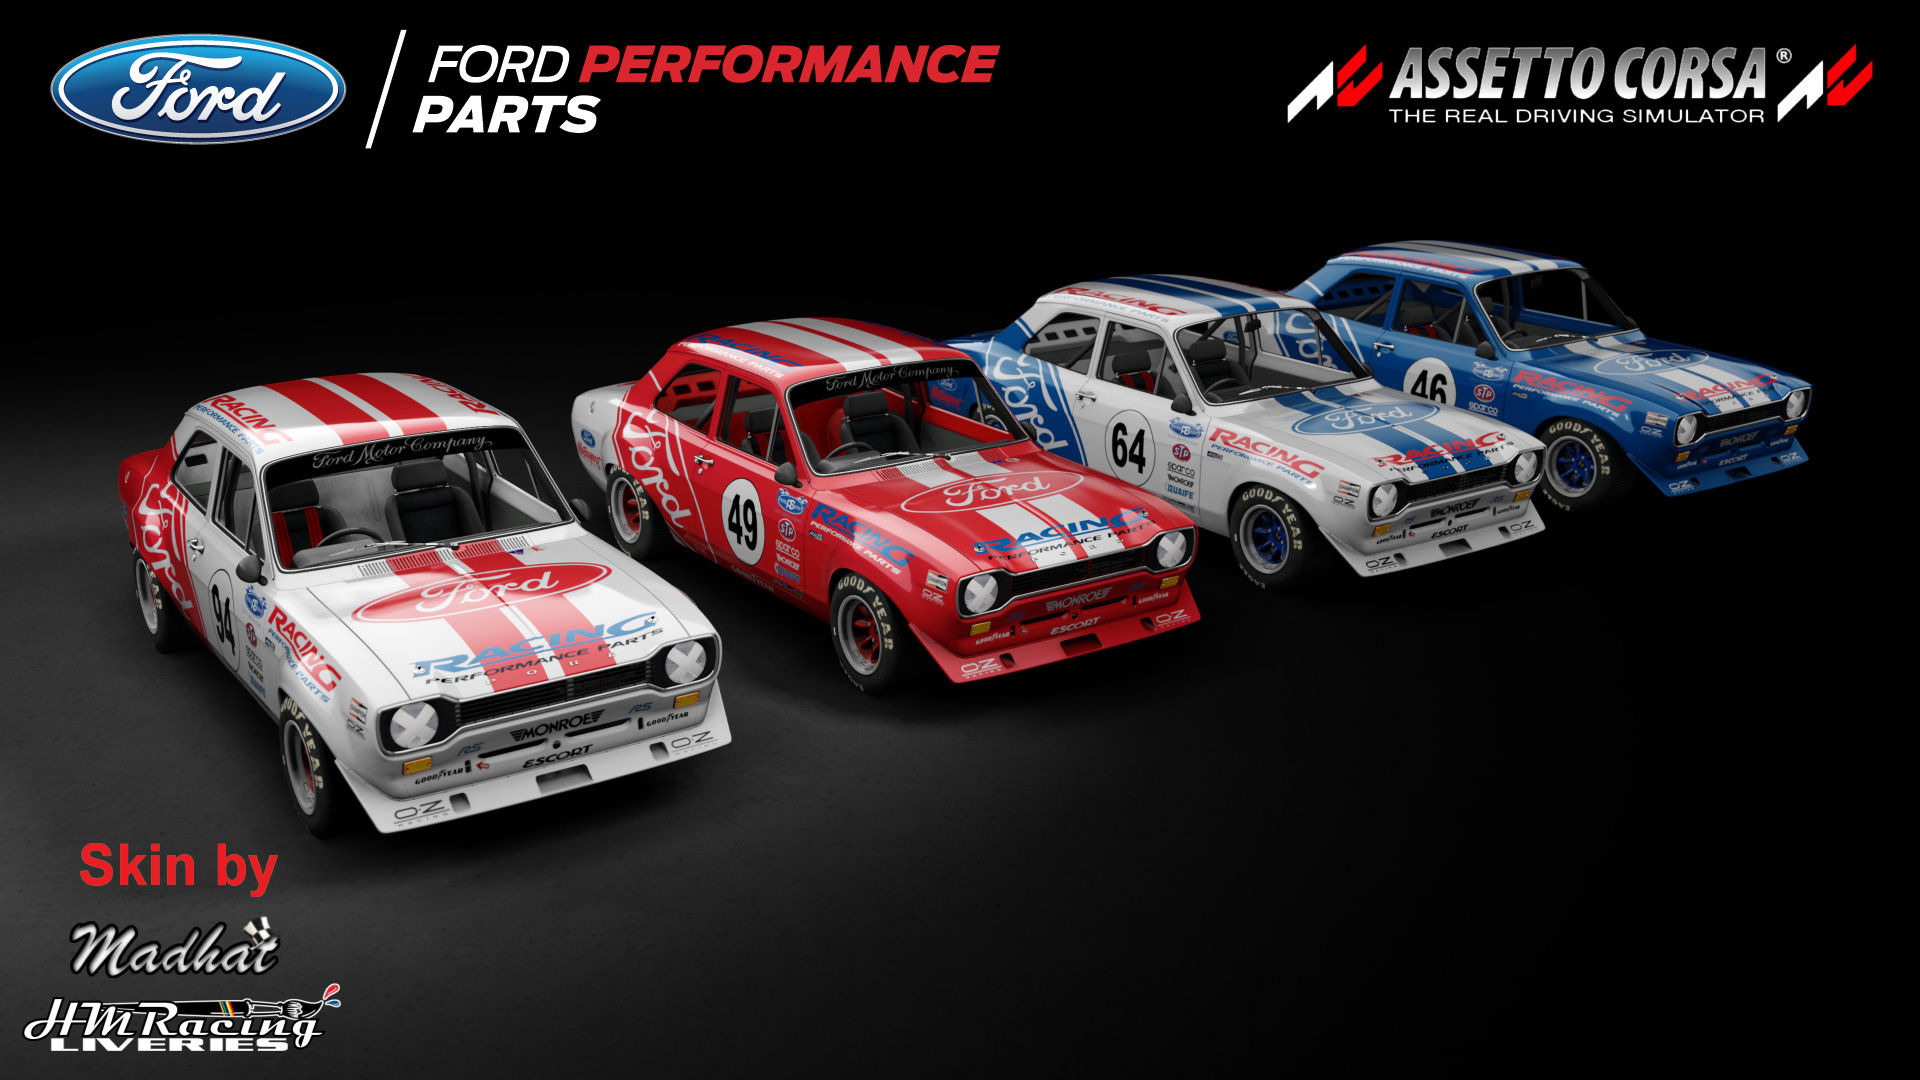 Ford Escort Mk1 Racing Performance Parts group shot 01.jpg